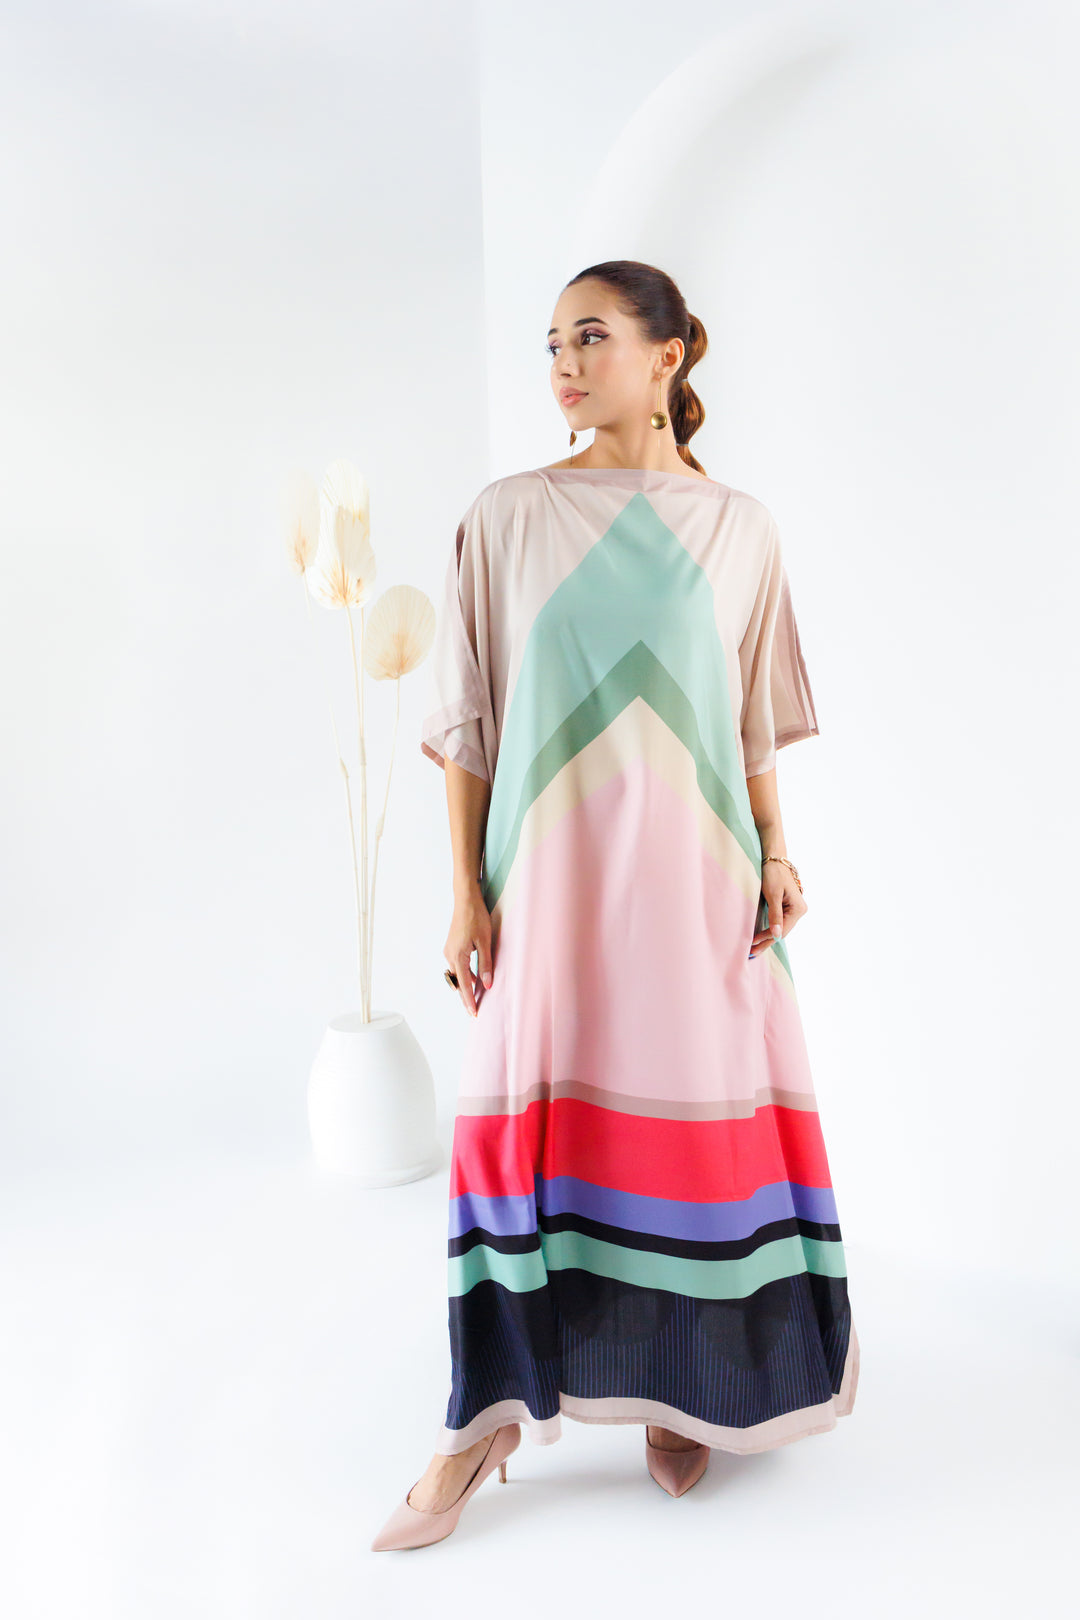 Stylish multicolored pastel kaftan attire for ladies.